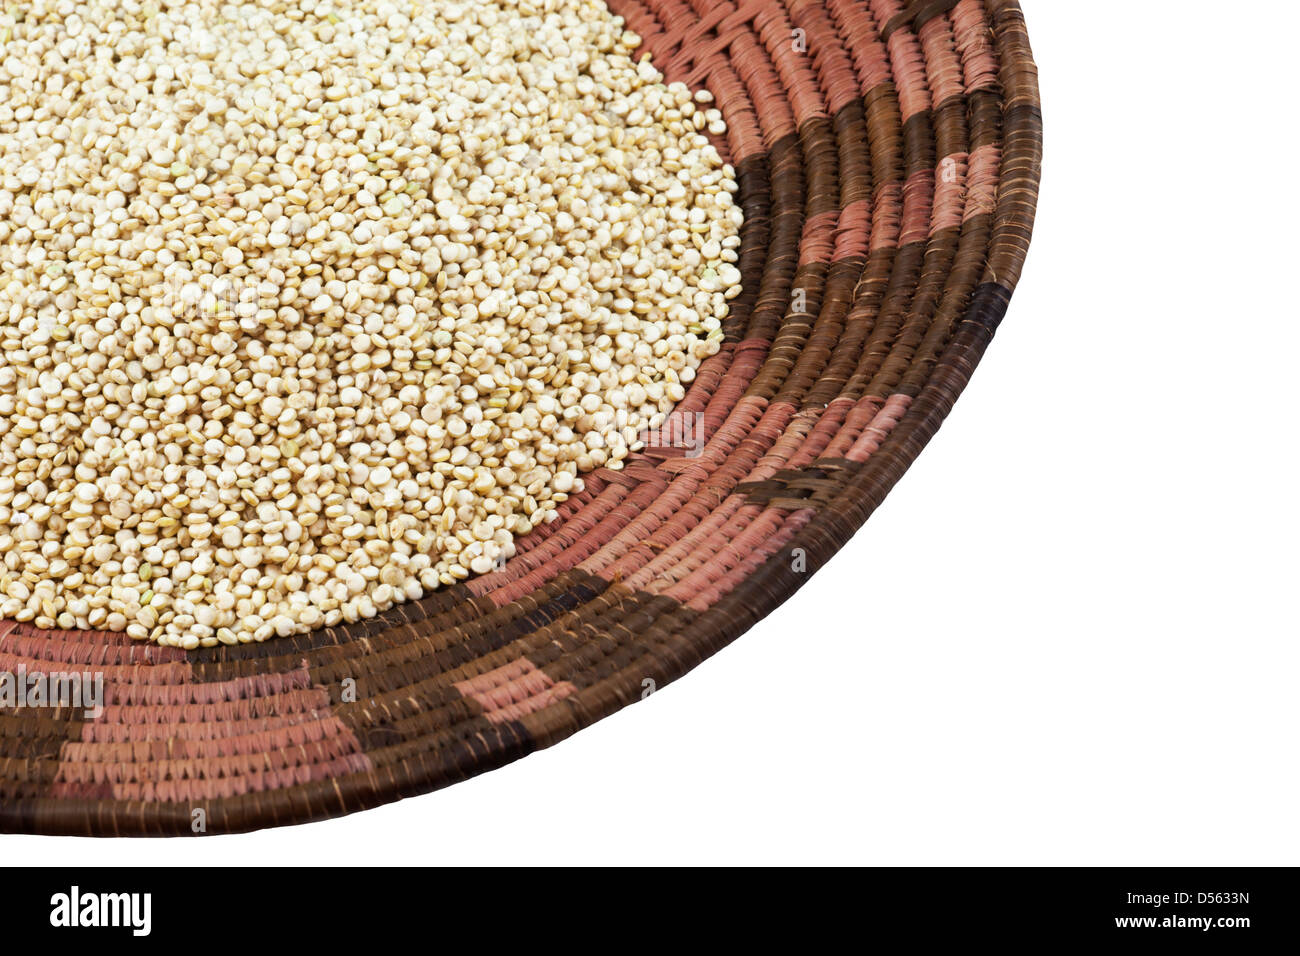 Organic golden/ white Quinoa grain (Chenopodium quinoa) in basket Stock Photo